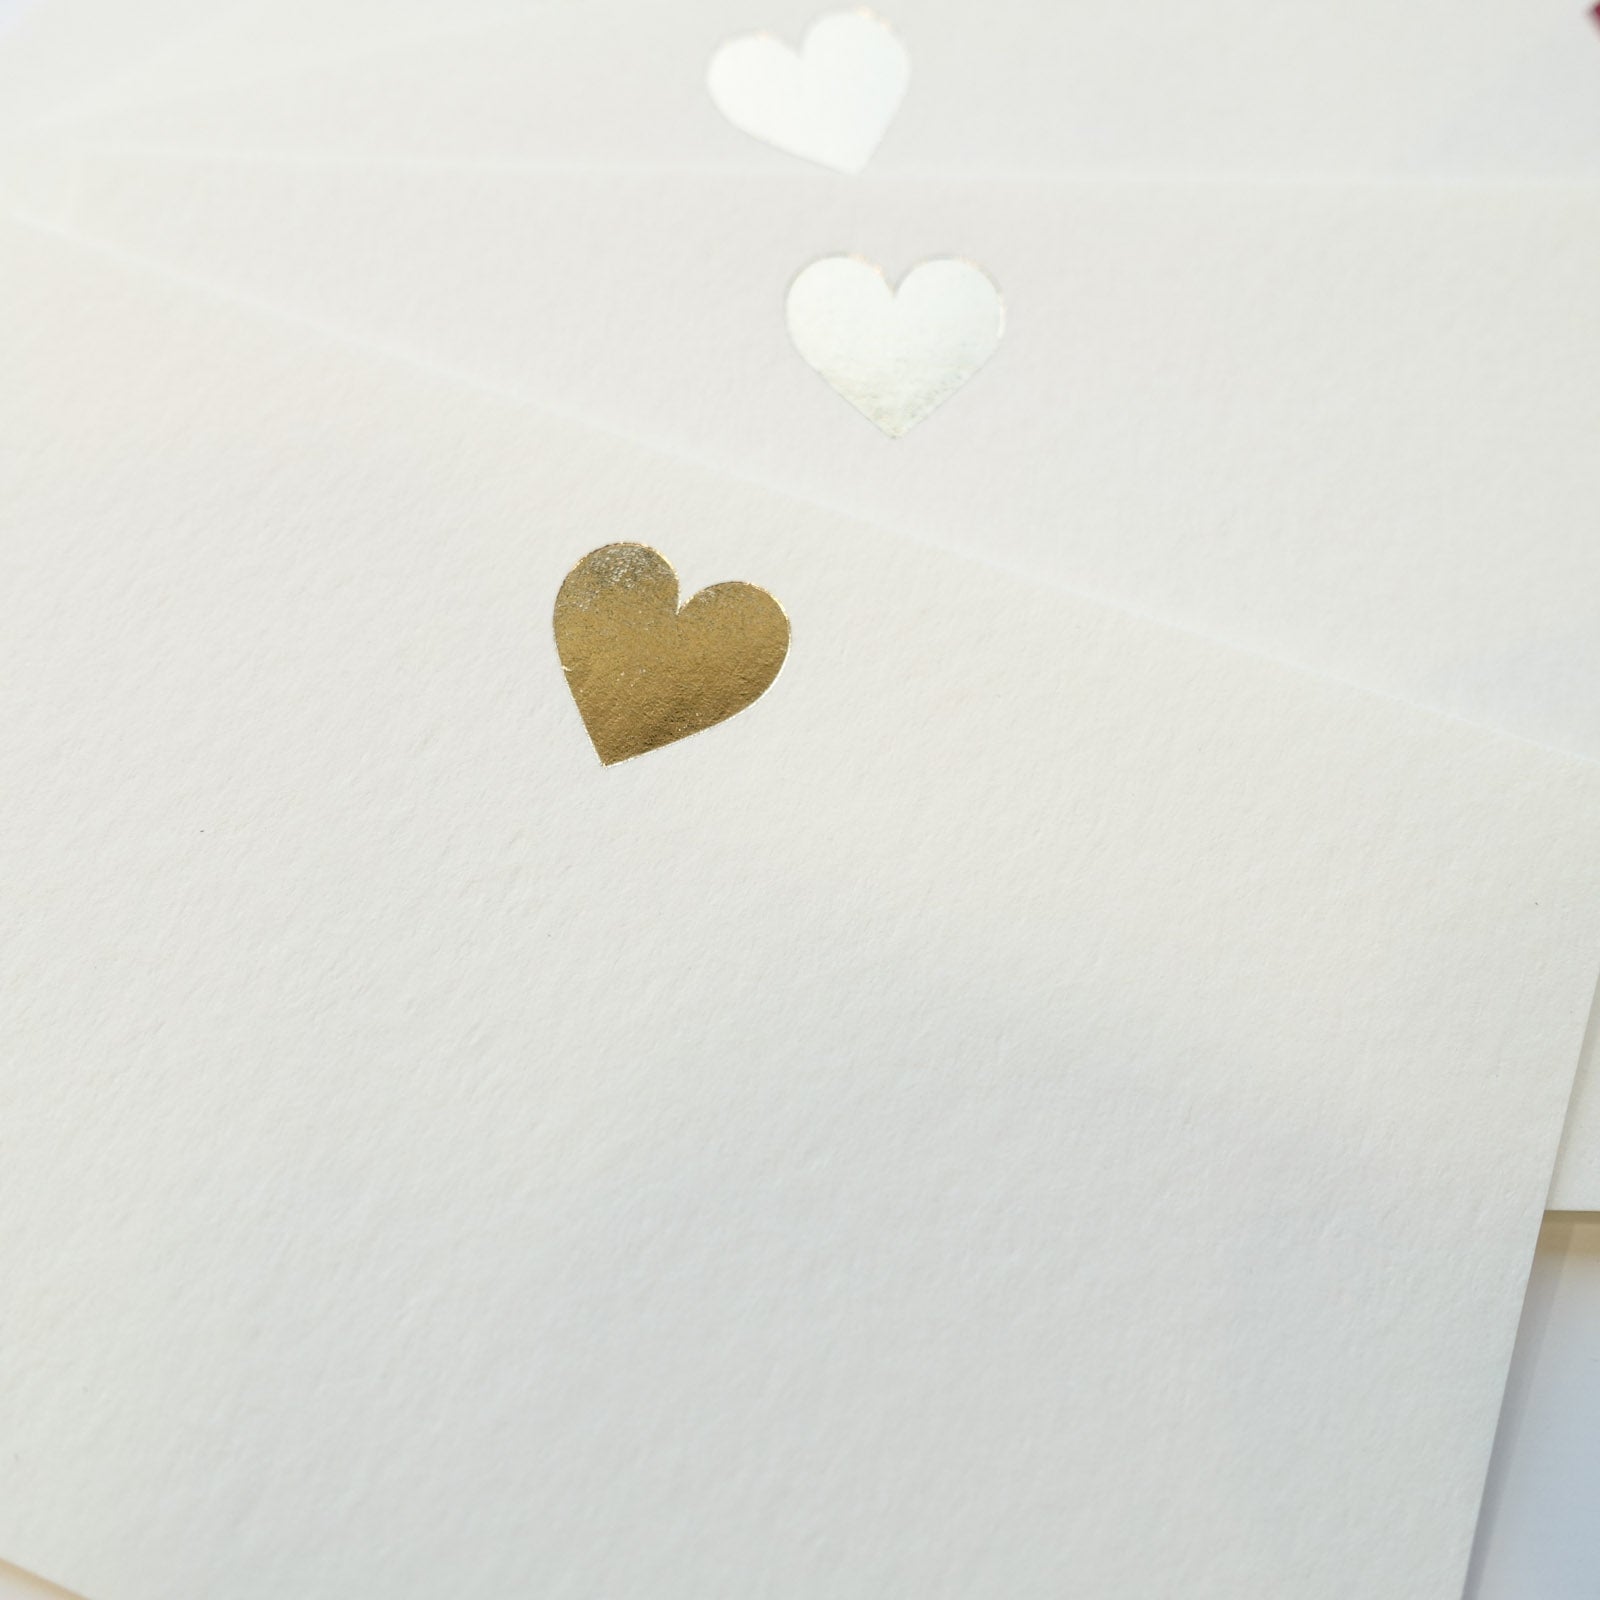 card and envelope mini letter writing set love heart australia